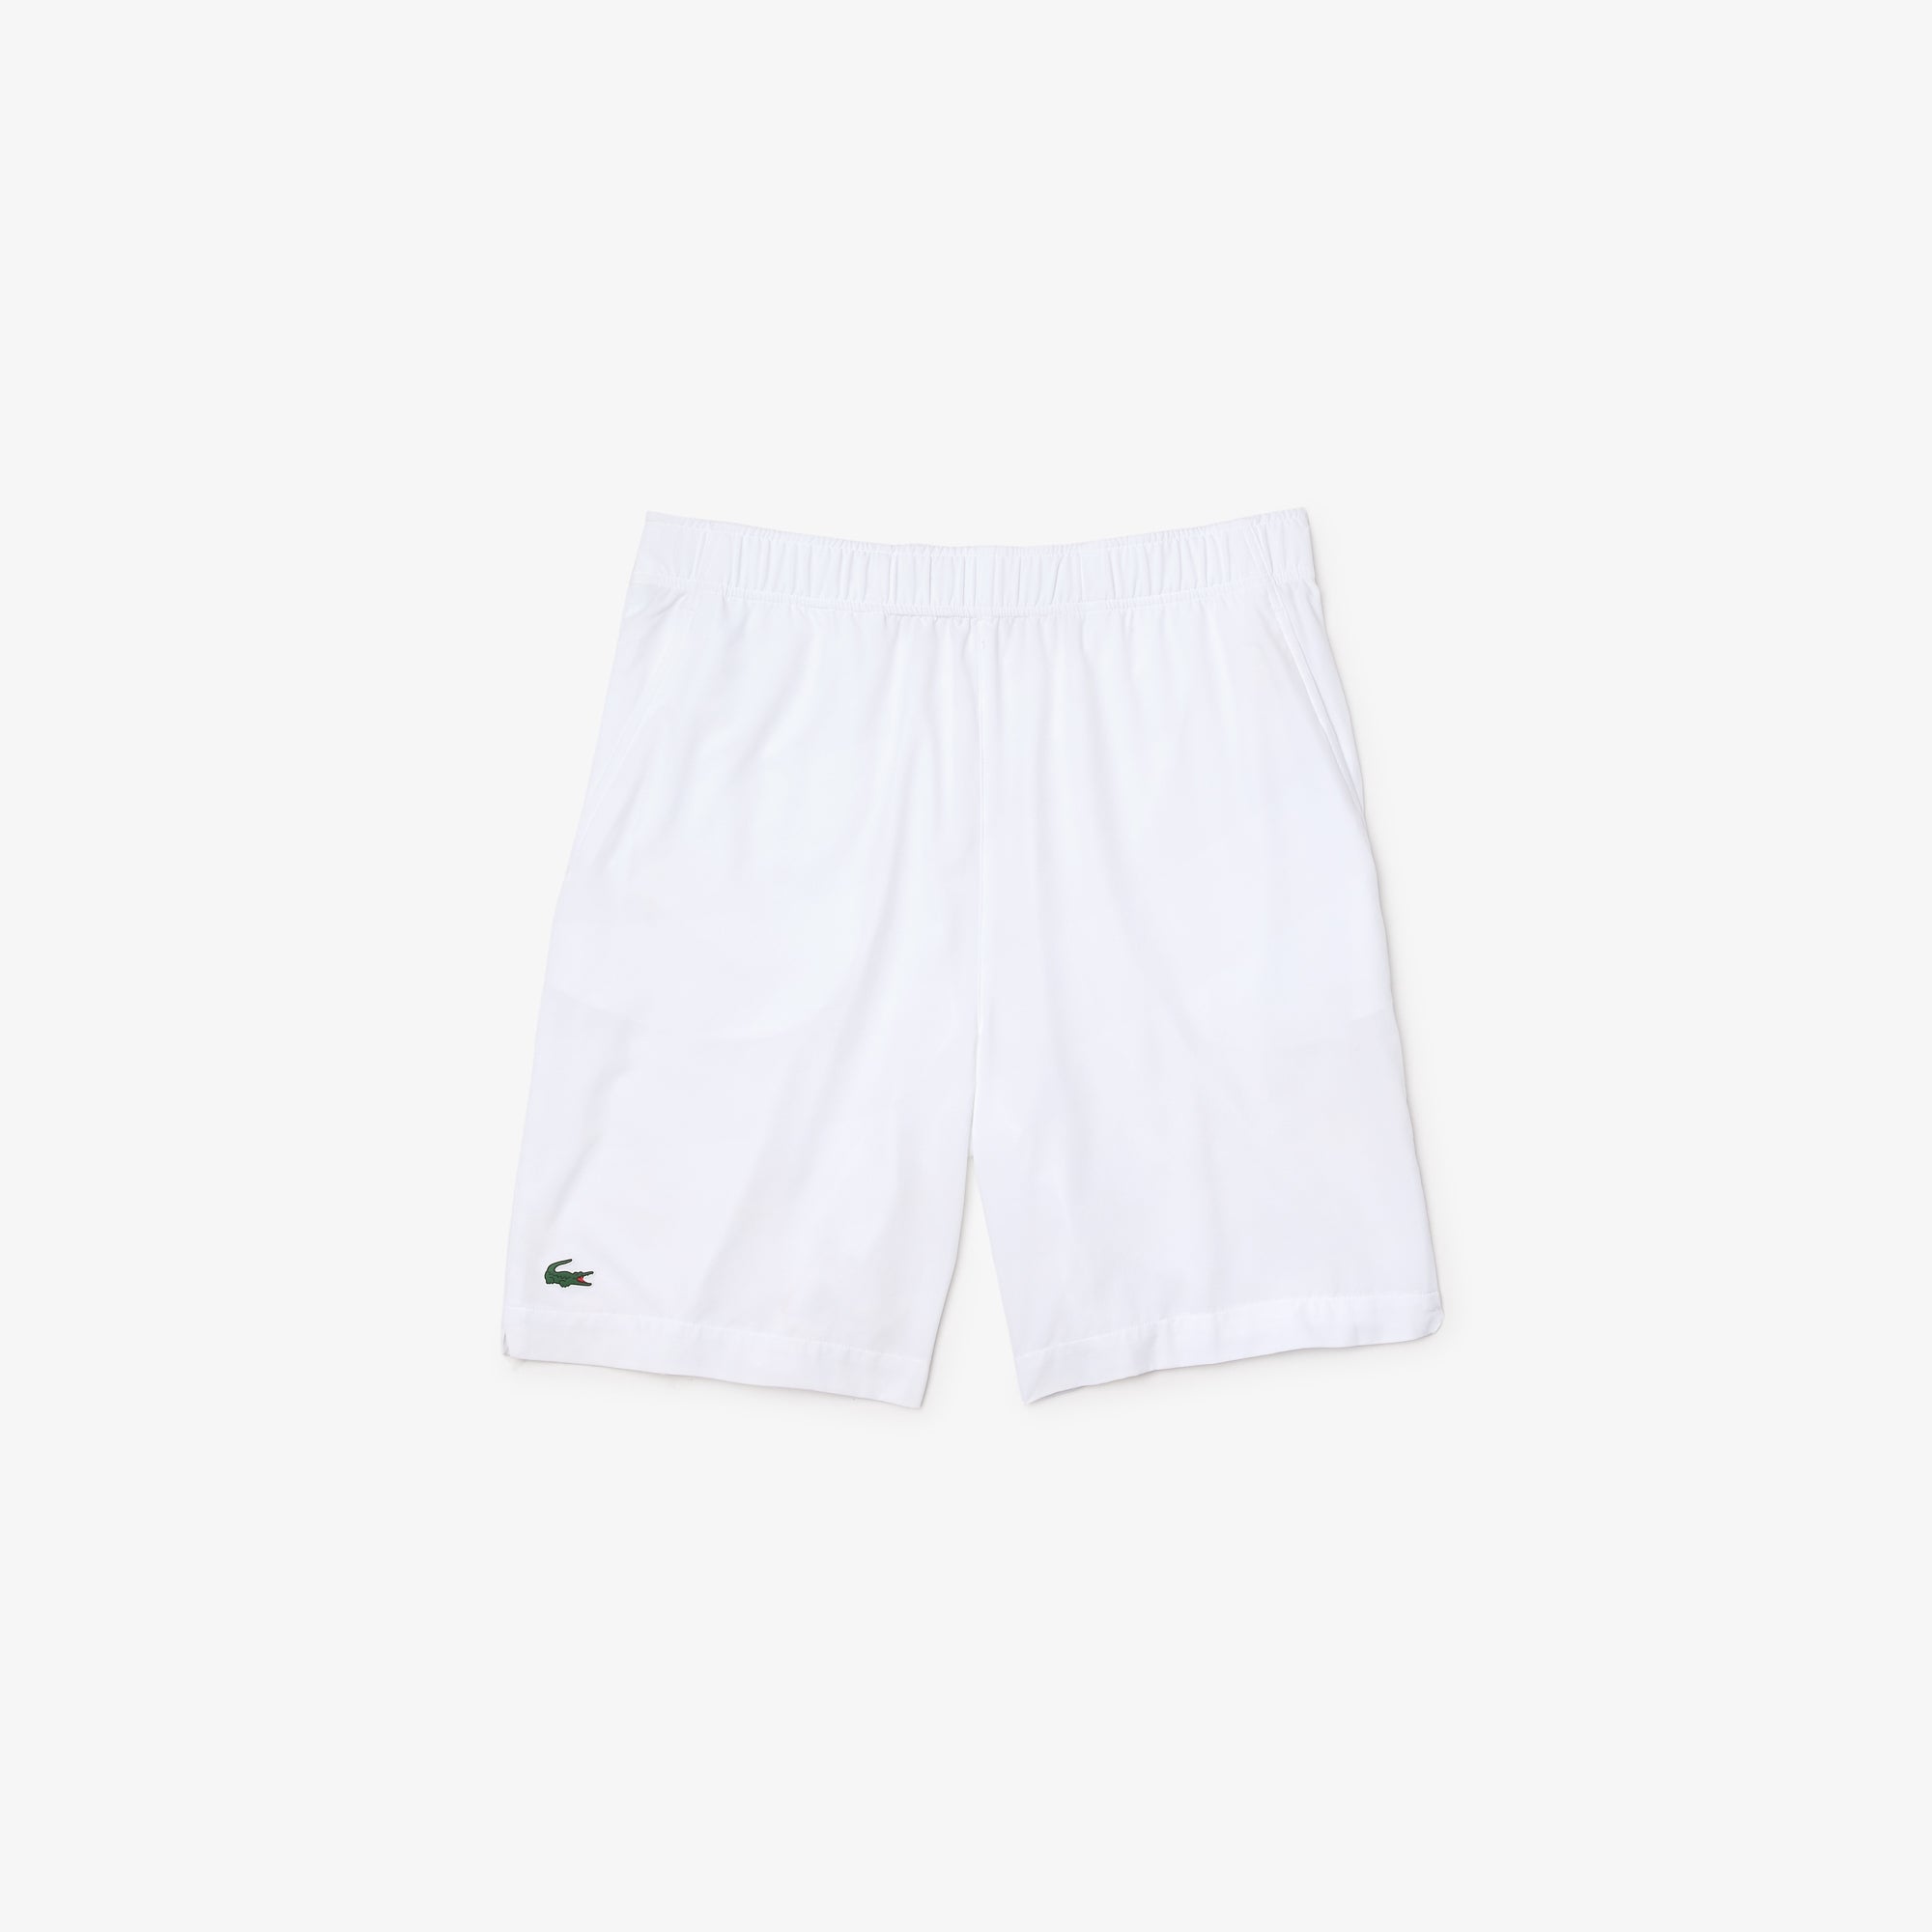 Lacoste Shorts (Weiß/Marineblau)